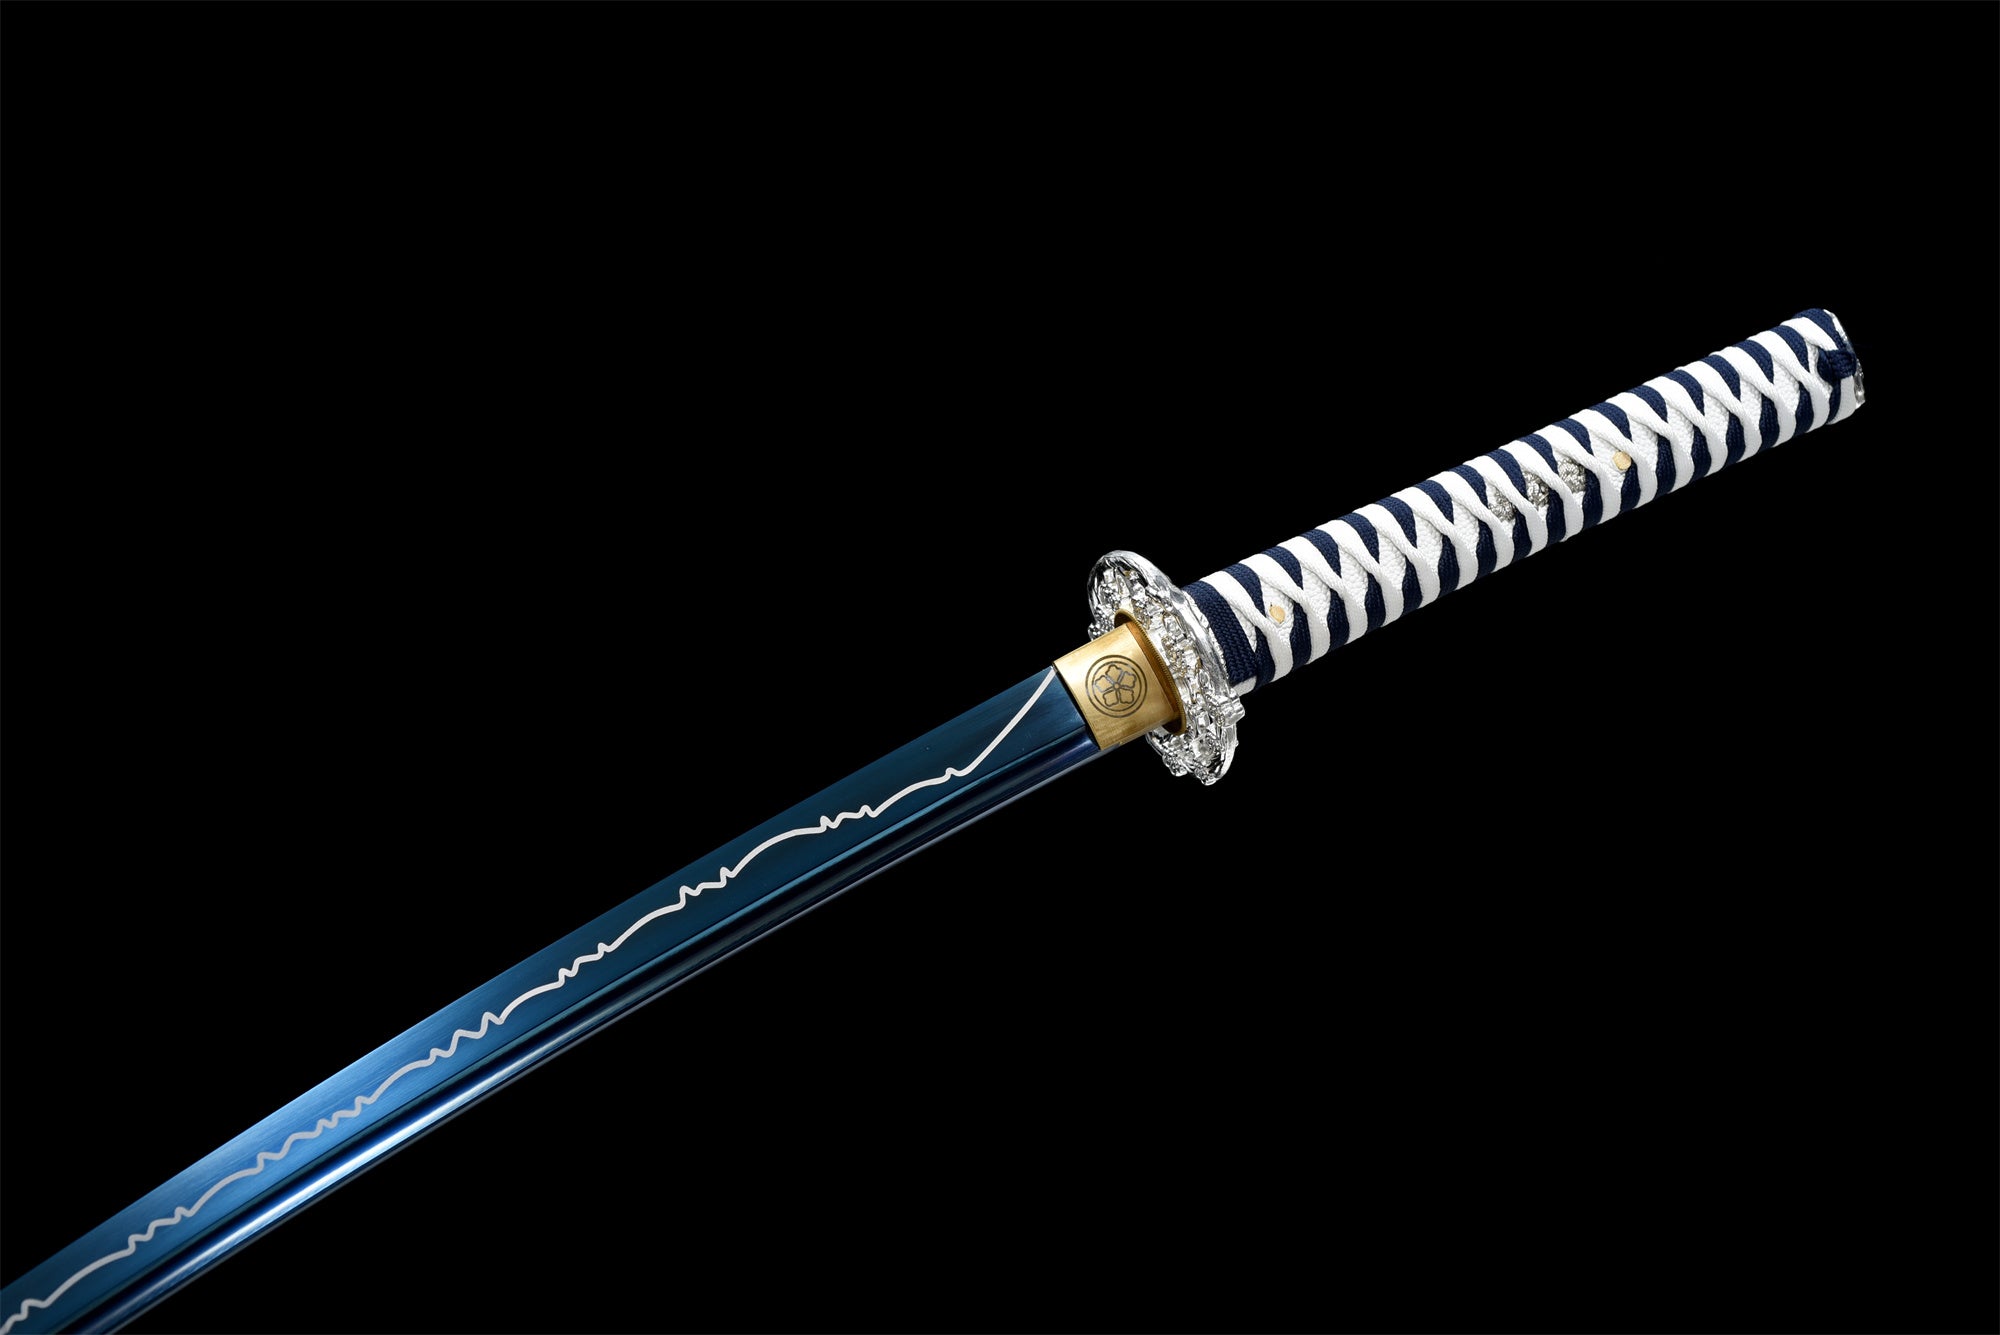 Blue Elves Katana,Japanese Samurai Sword,Real Katana,Handmade sword,High manganese steel,Roasted blue blade